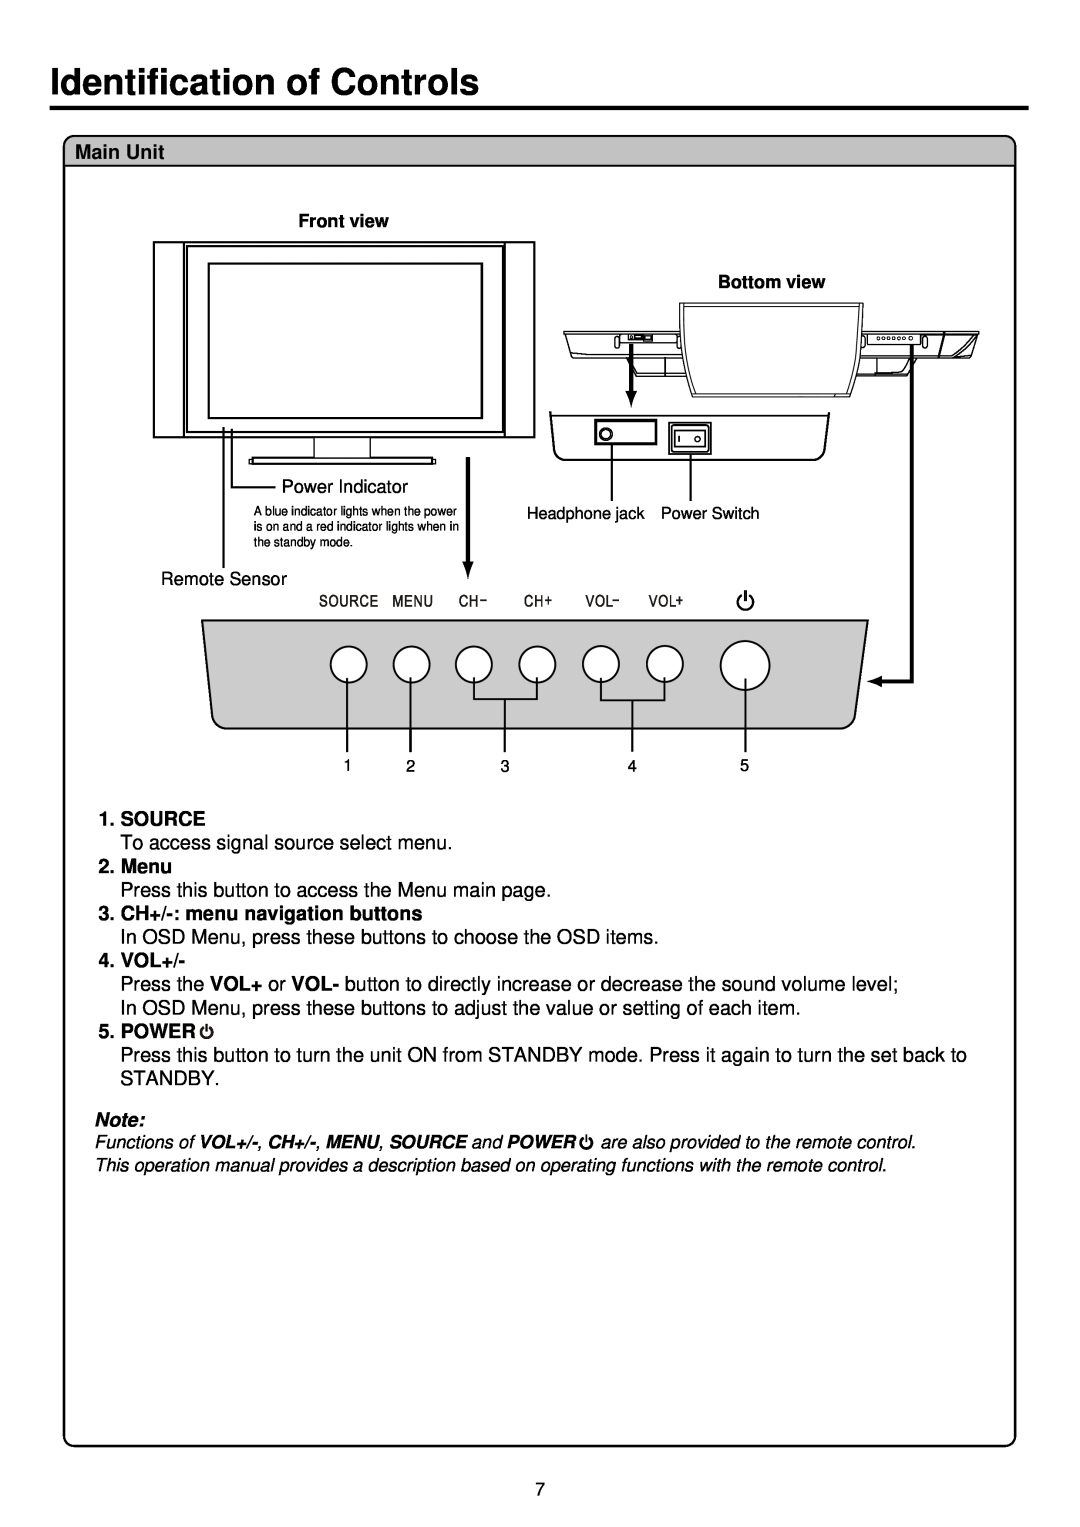 Palsonic TFTV930 Identification of Controls, Main Unit, Source, Menu, 3. CH+/- menu navigation buttons, Vol+, Power 